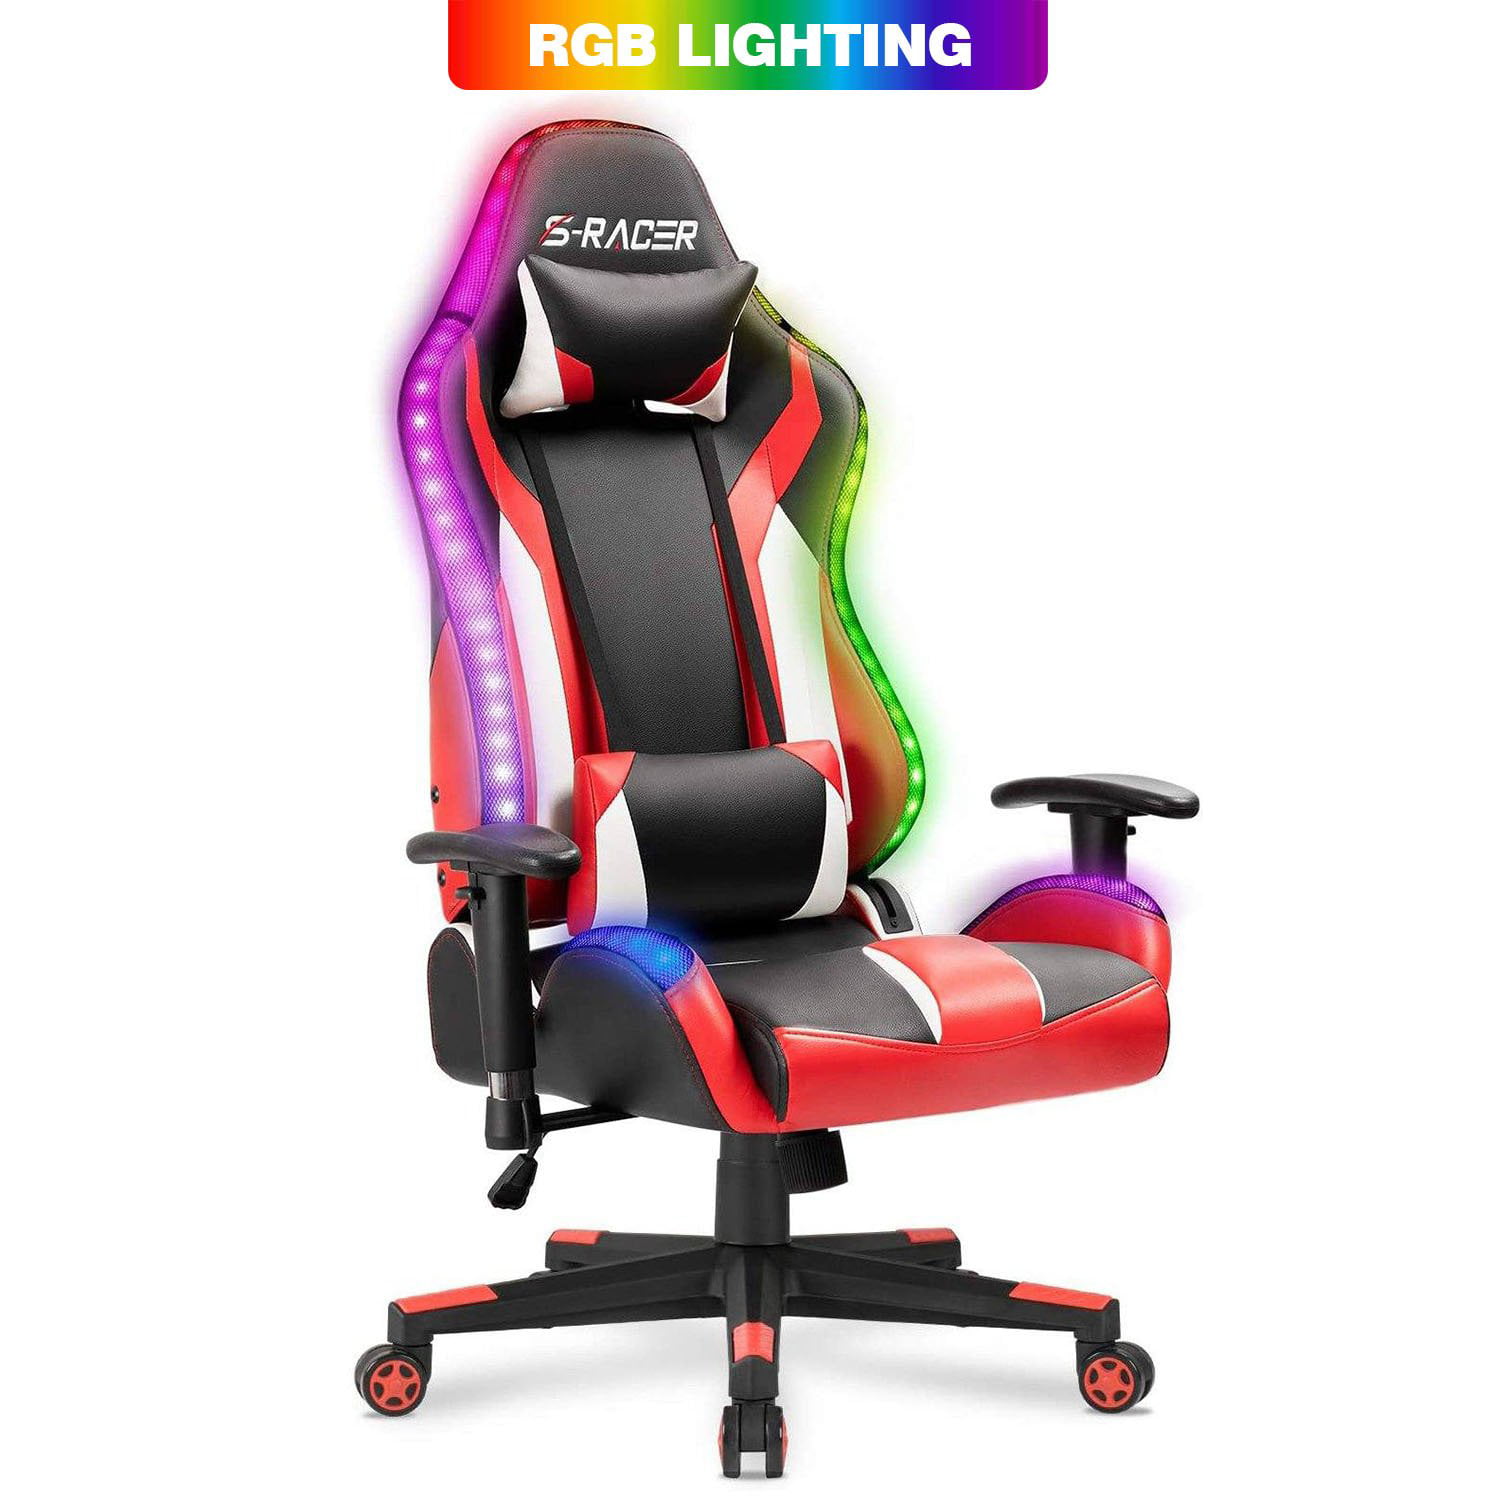  Gaming Chair Rgb Lighting 